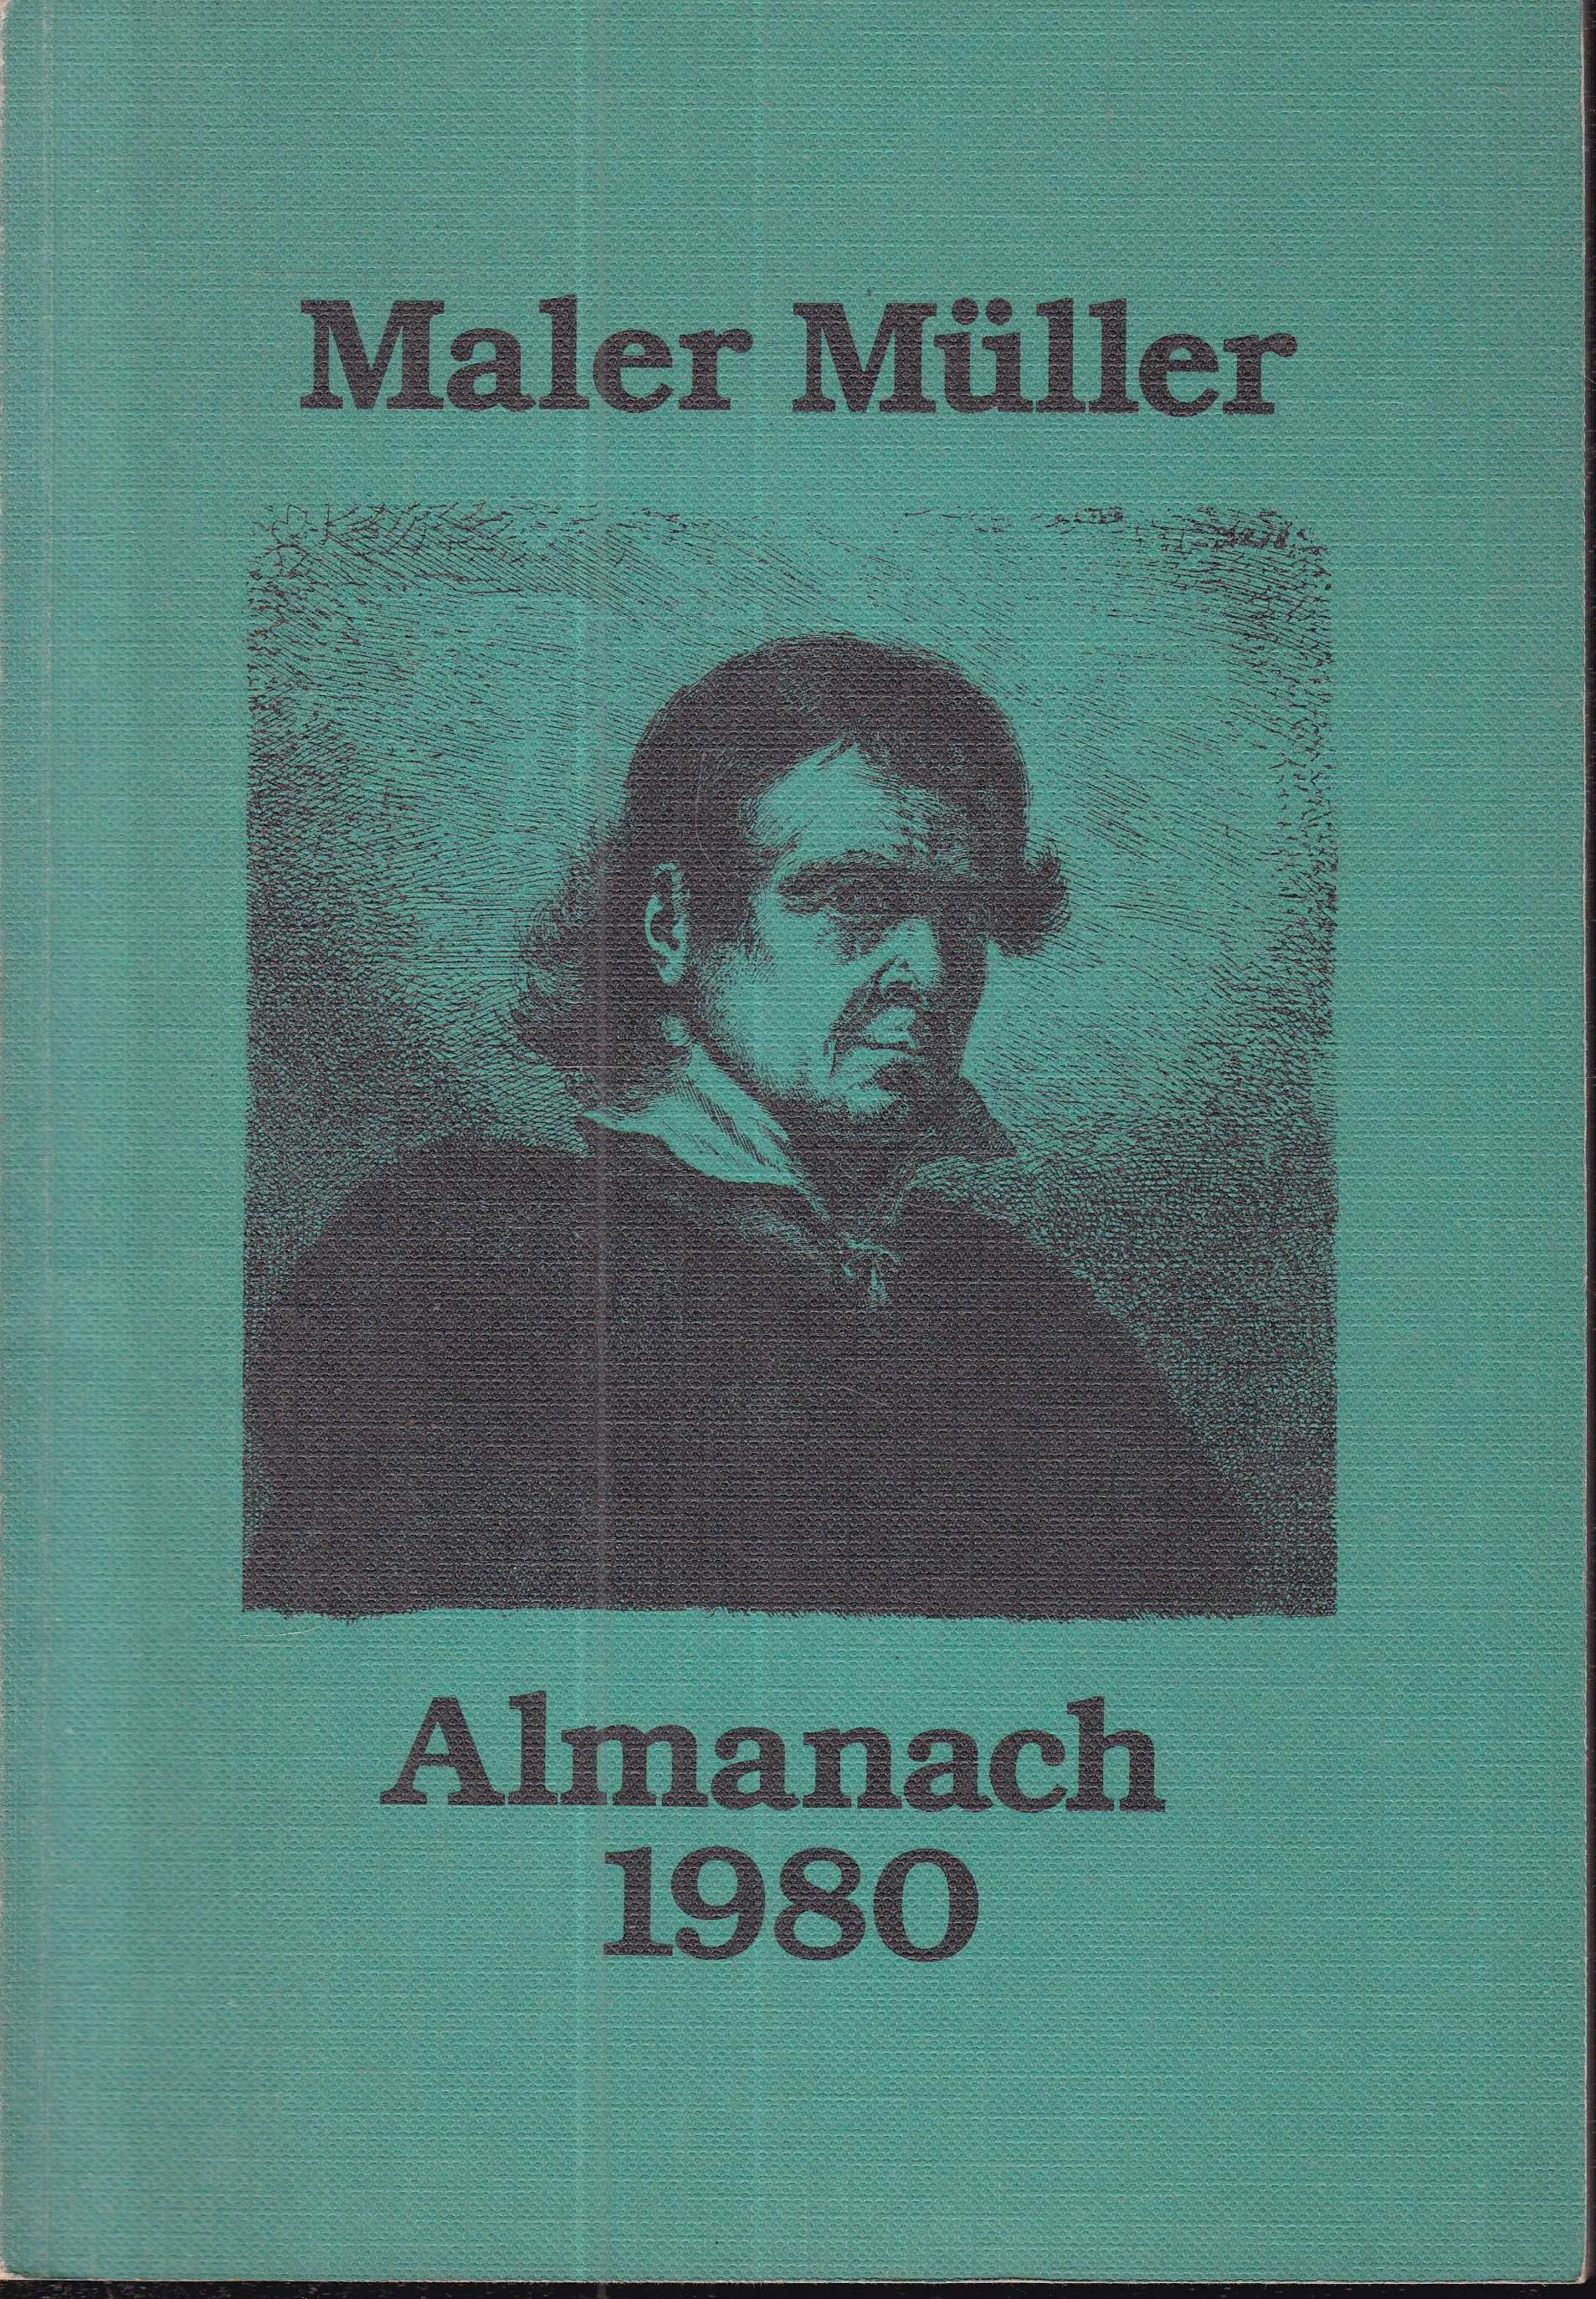 Maler-Müller Almanach 1980 - Paulus, Rolf